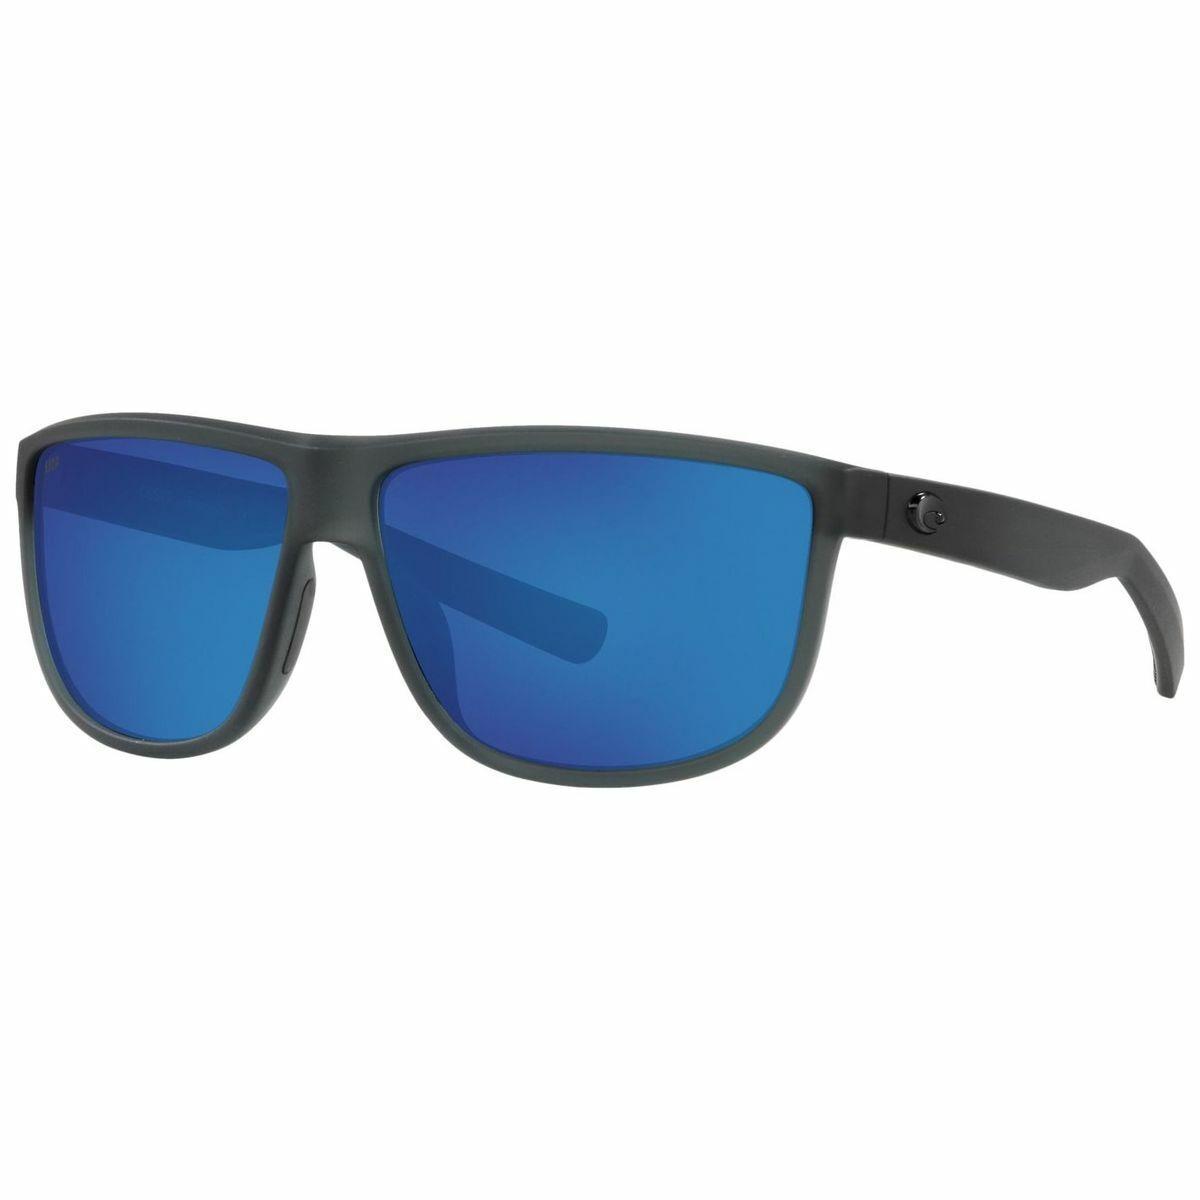 Costa Rincondo Polarized Sunglasses Matte 156 Smoke Crystal / Blue 580P